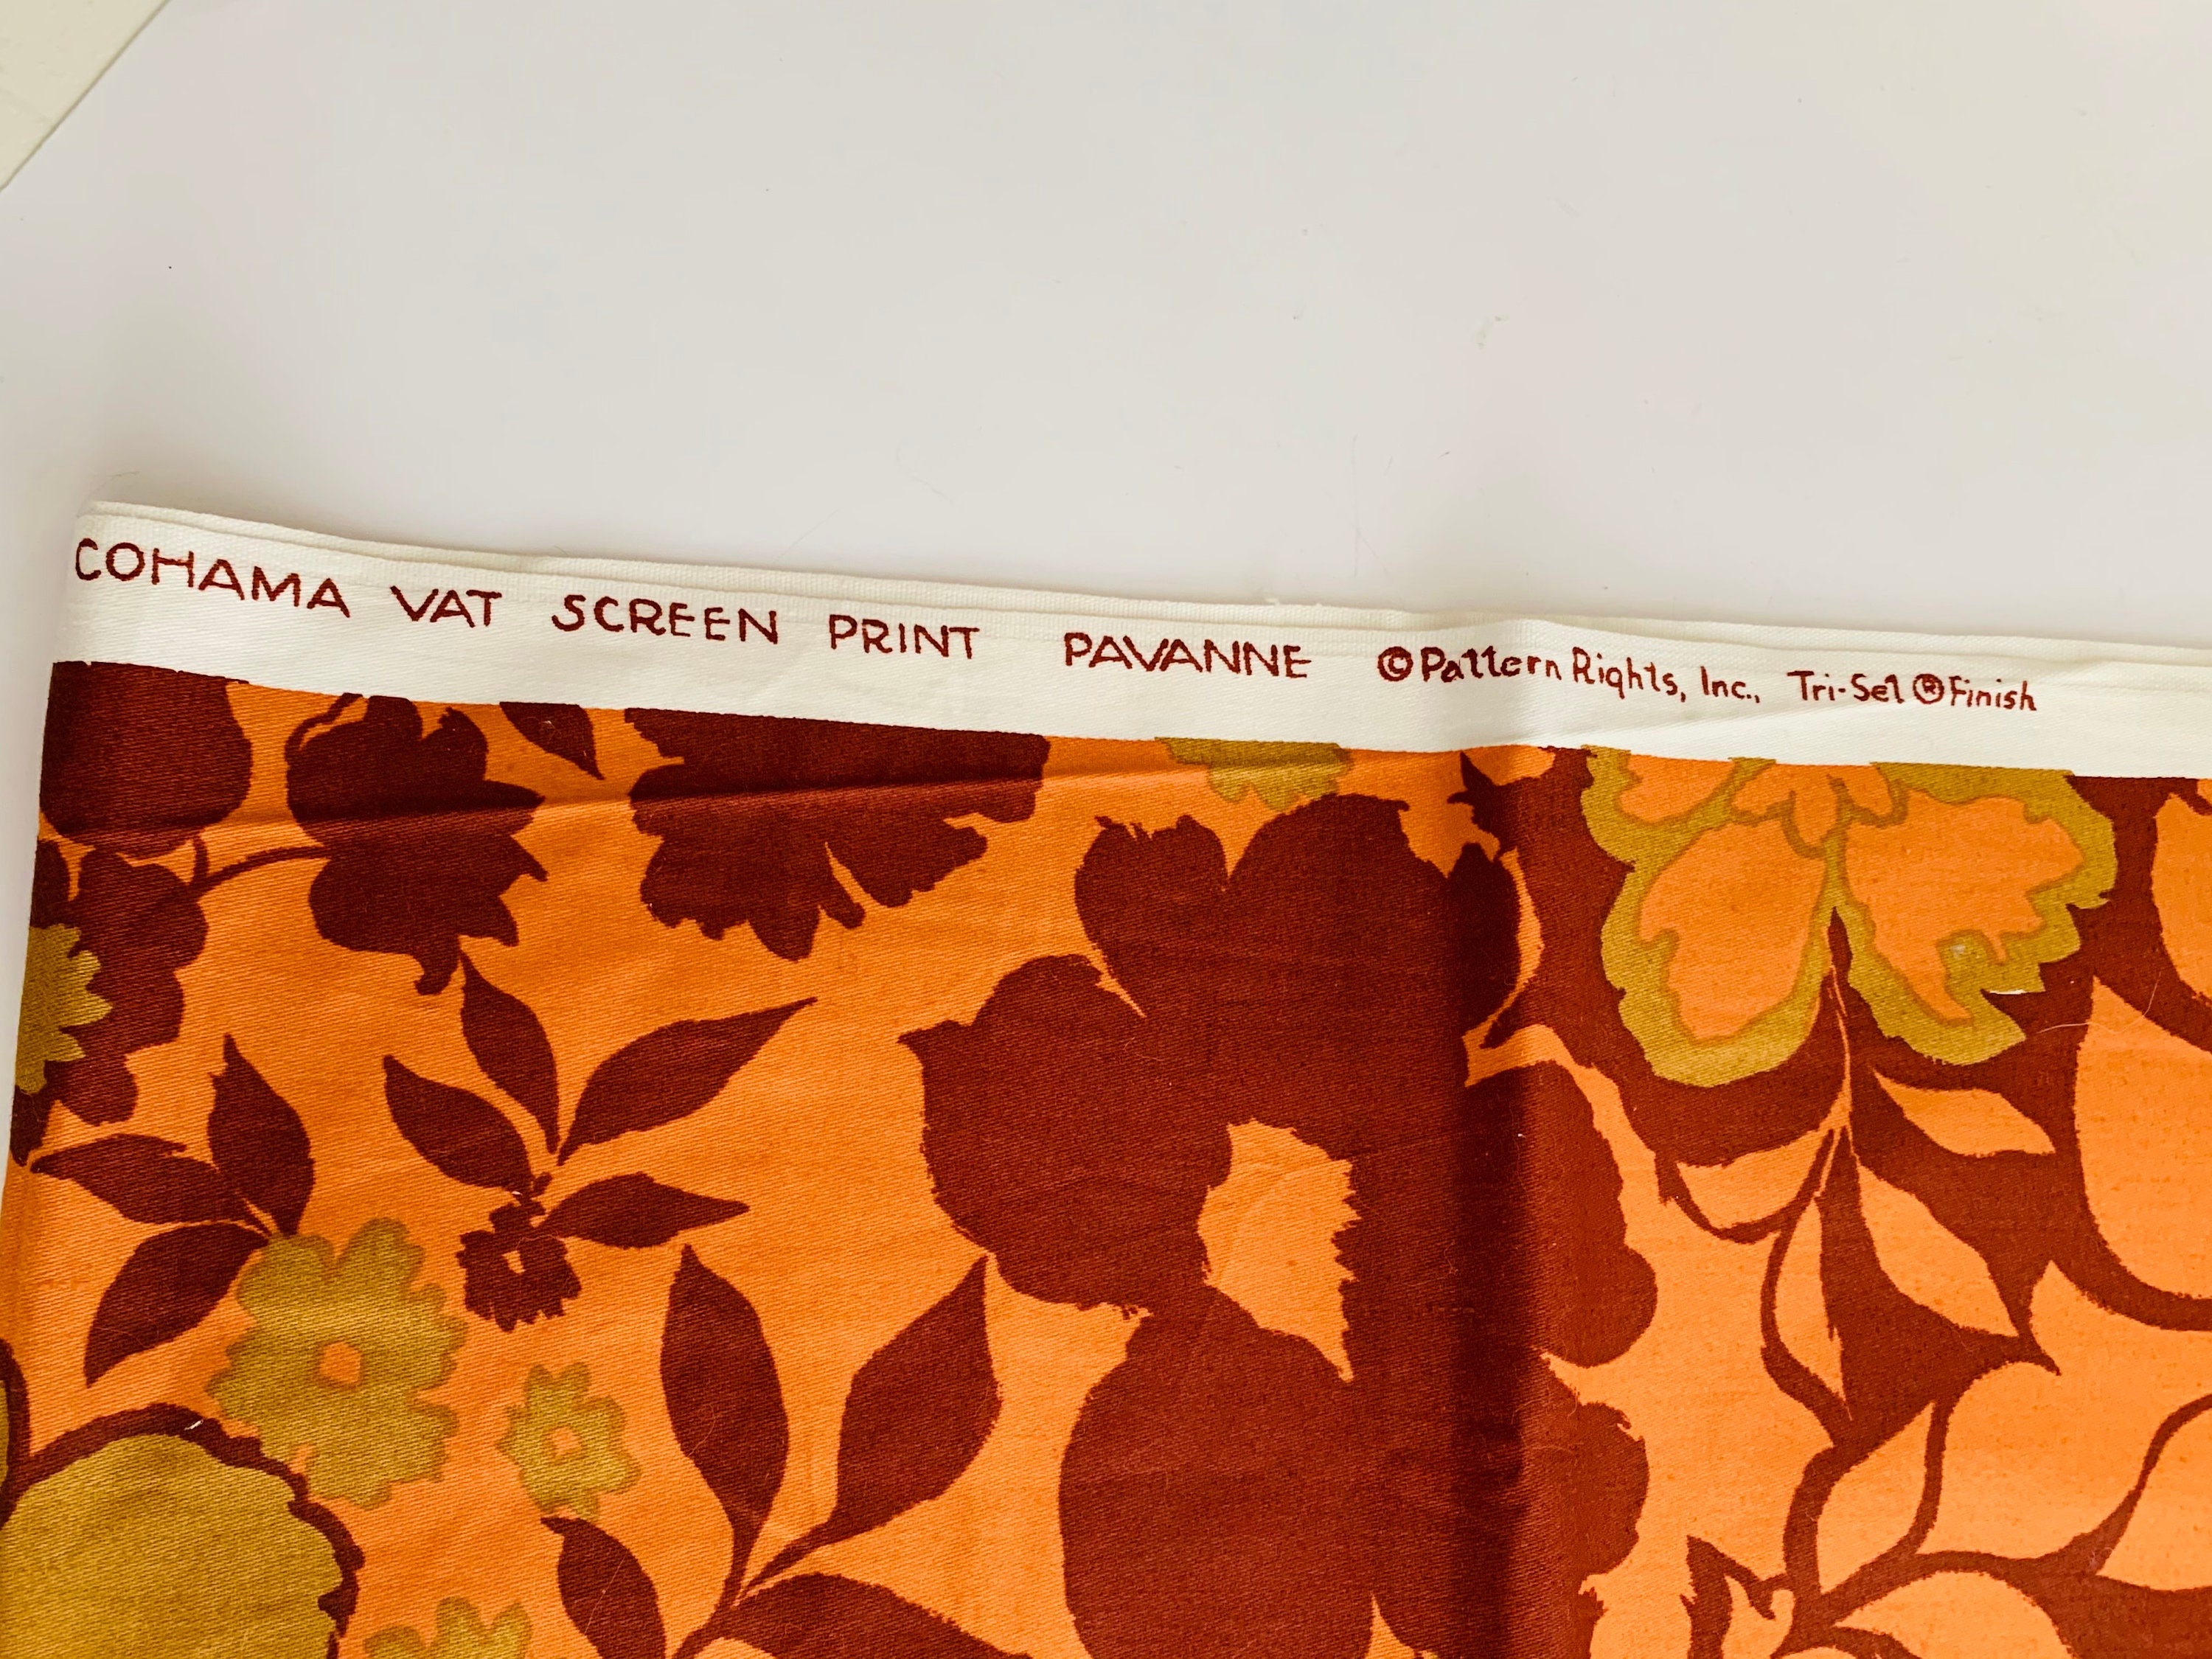 Vintage Fabric Cohama Vat Screen Print Pavanne | Etsy